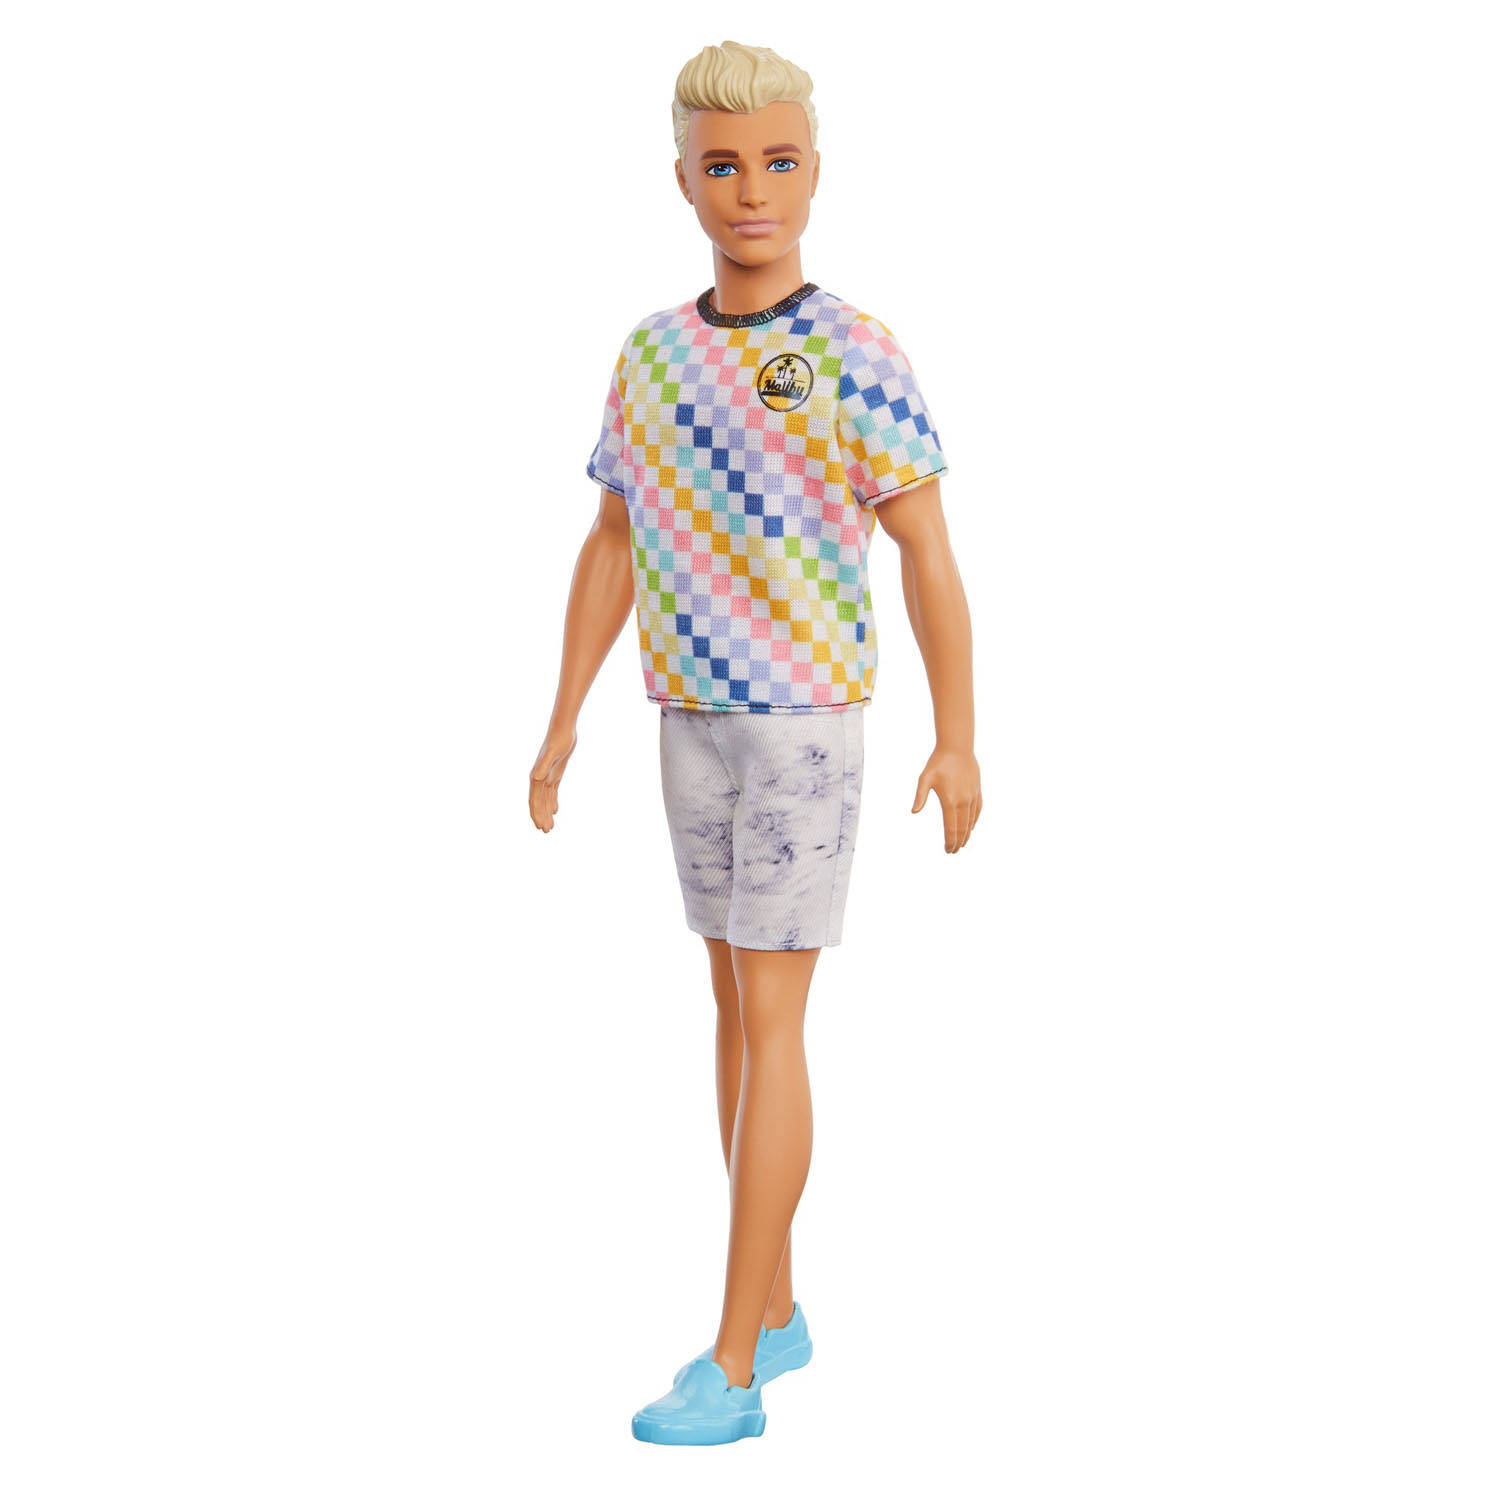 Barbie Ken Fashionista Pop - geblokt shirtje & korte broek